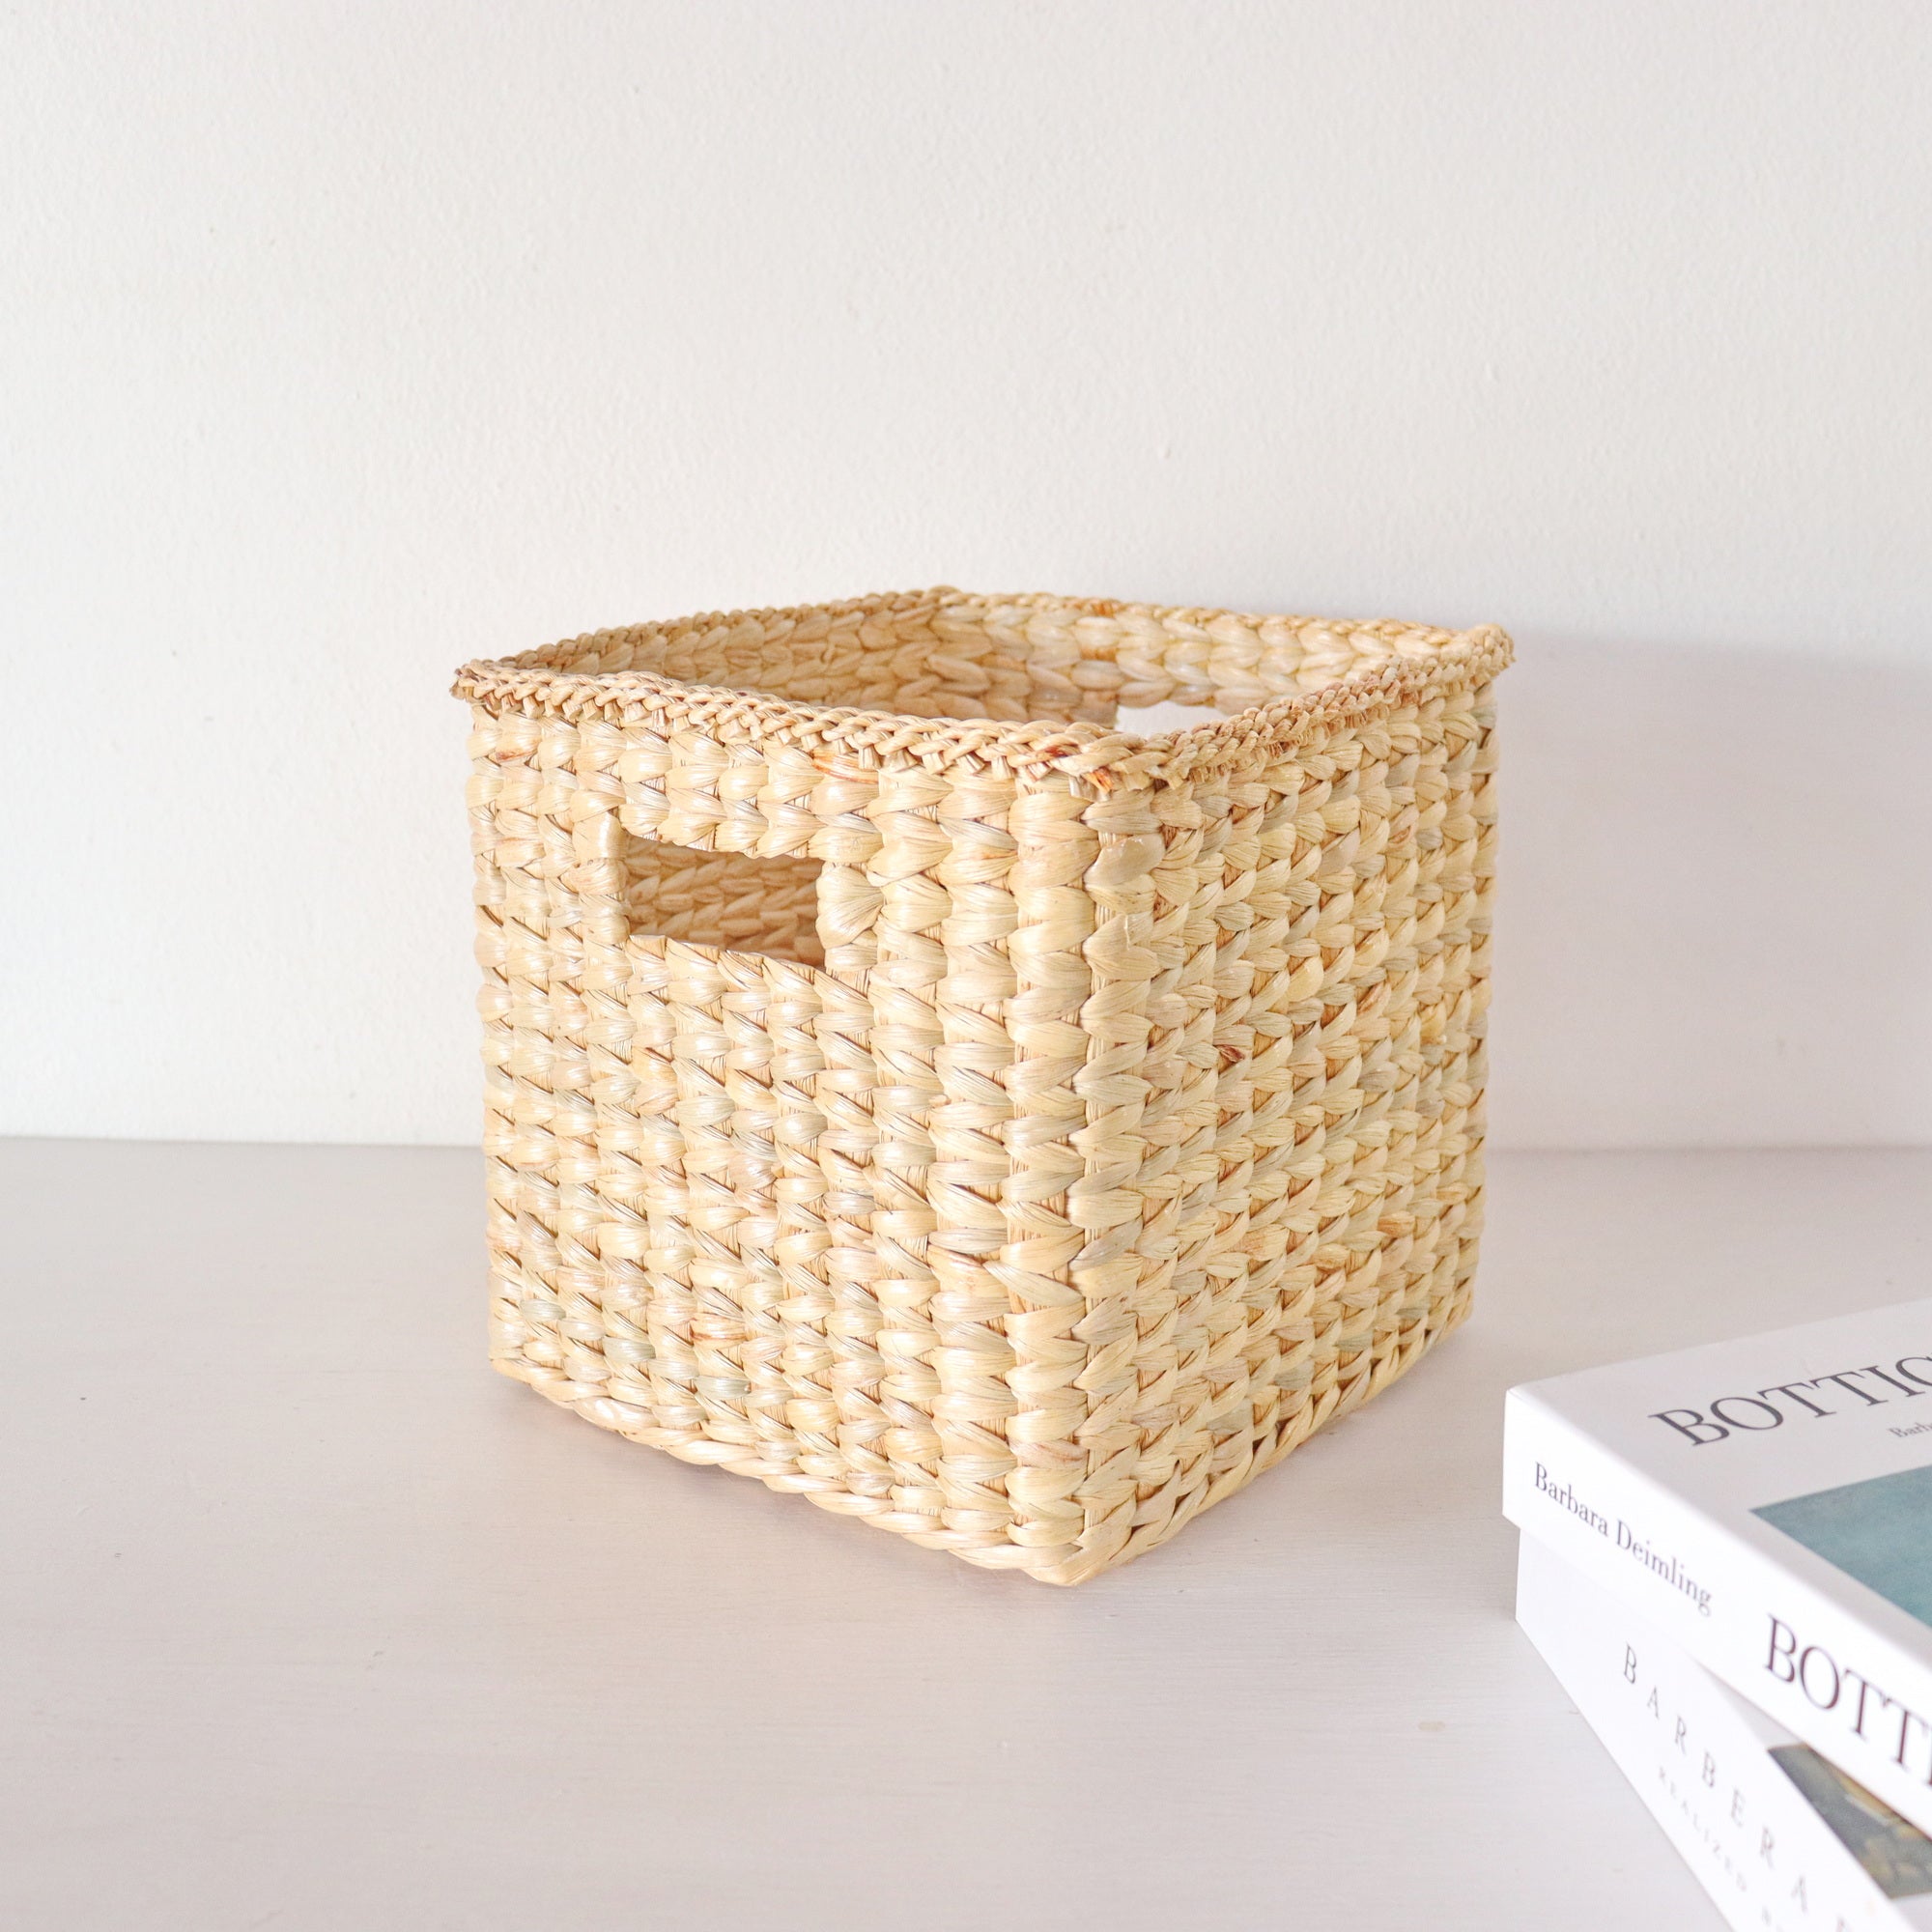 Square Storage Basket